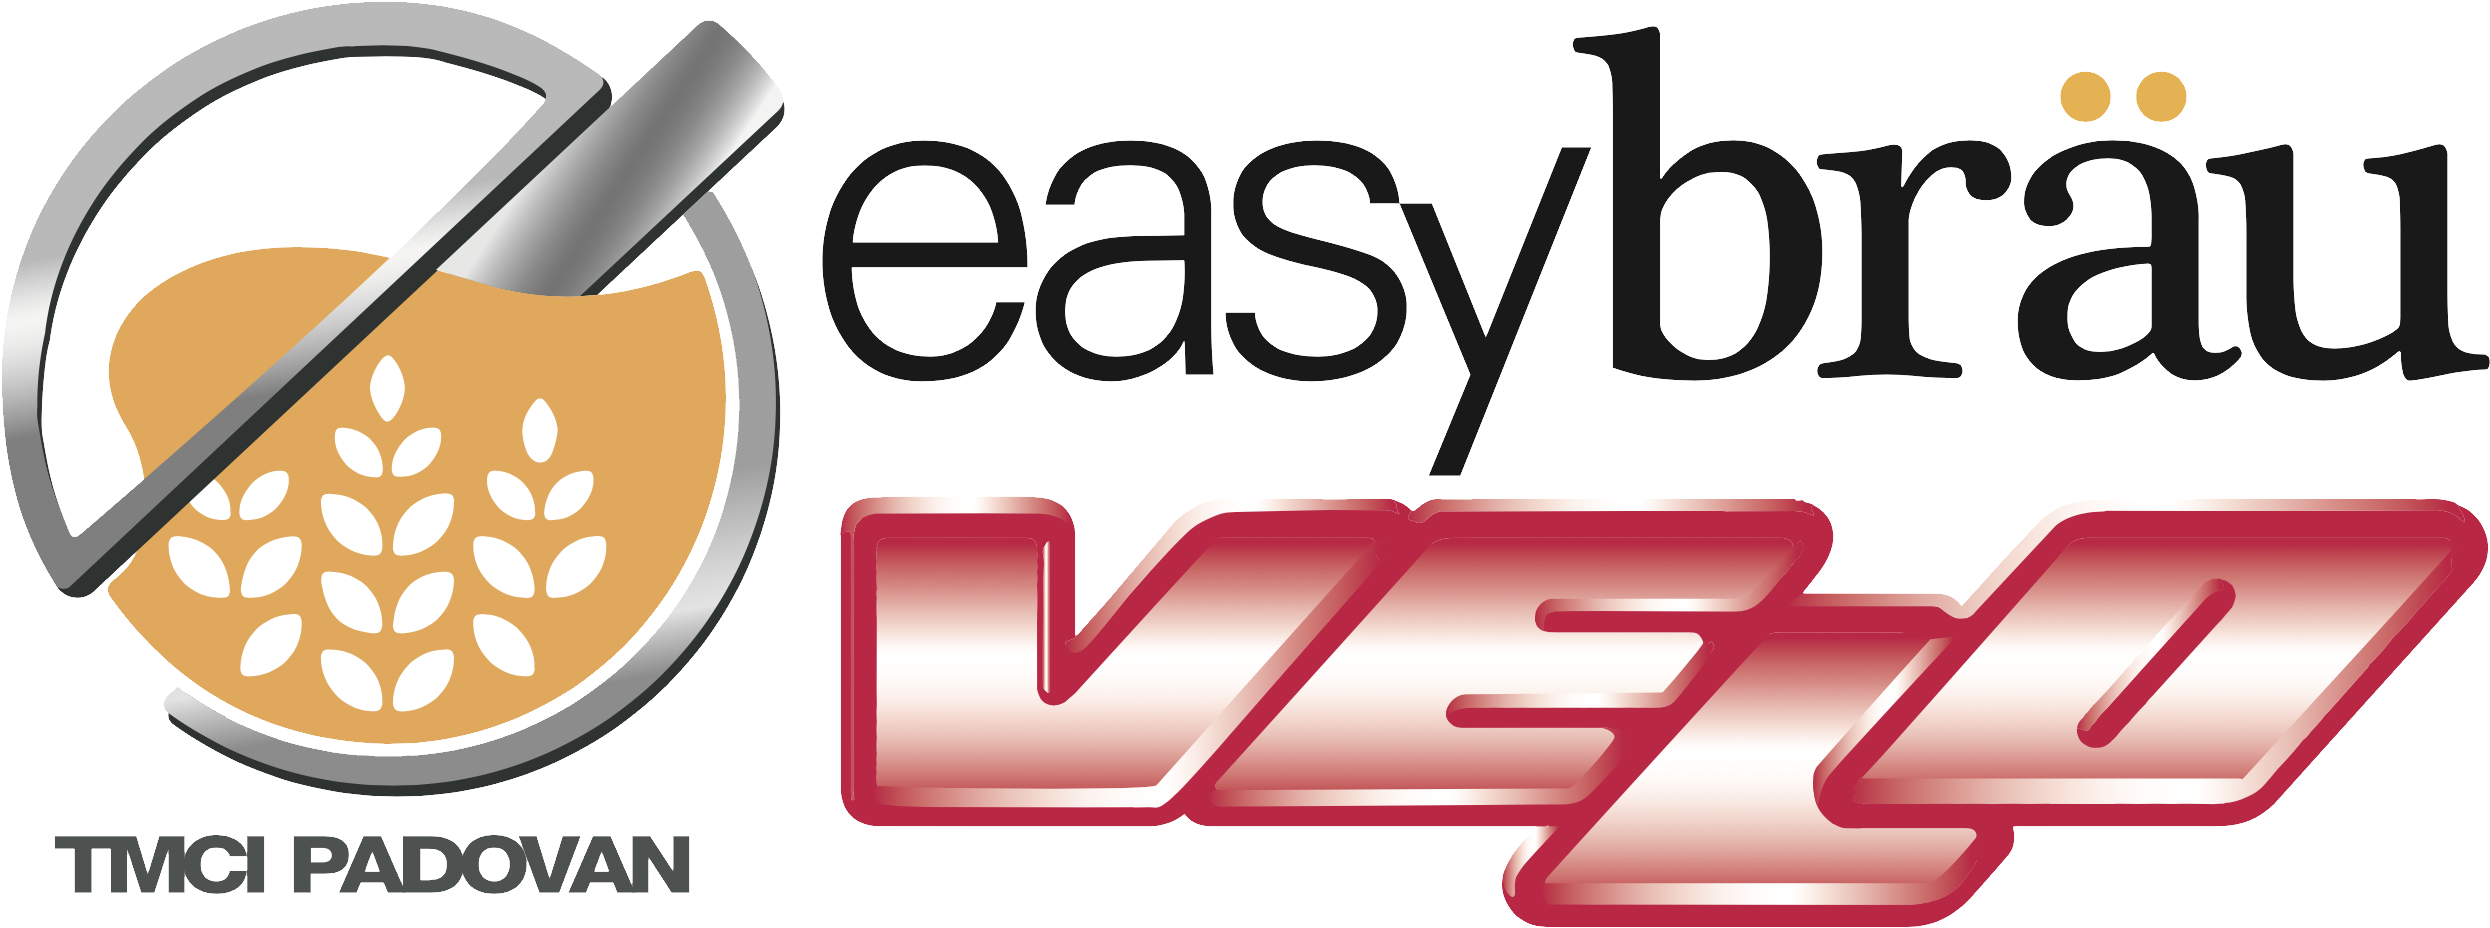 Easybräu-velo Is An Impiantinox Srl Brand Of Tmci Padovan - Memory Makers Fast & Easy Scrapbooking [book] (2602x1016)